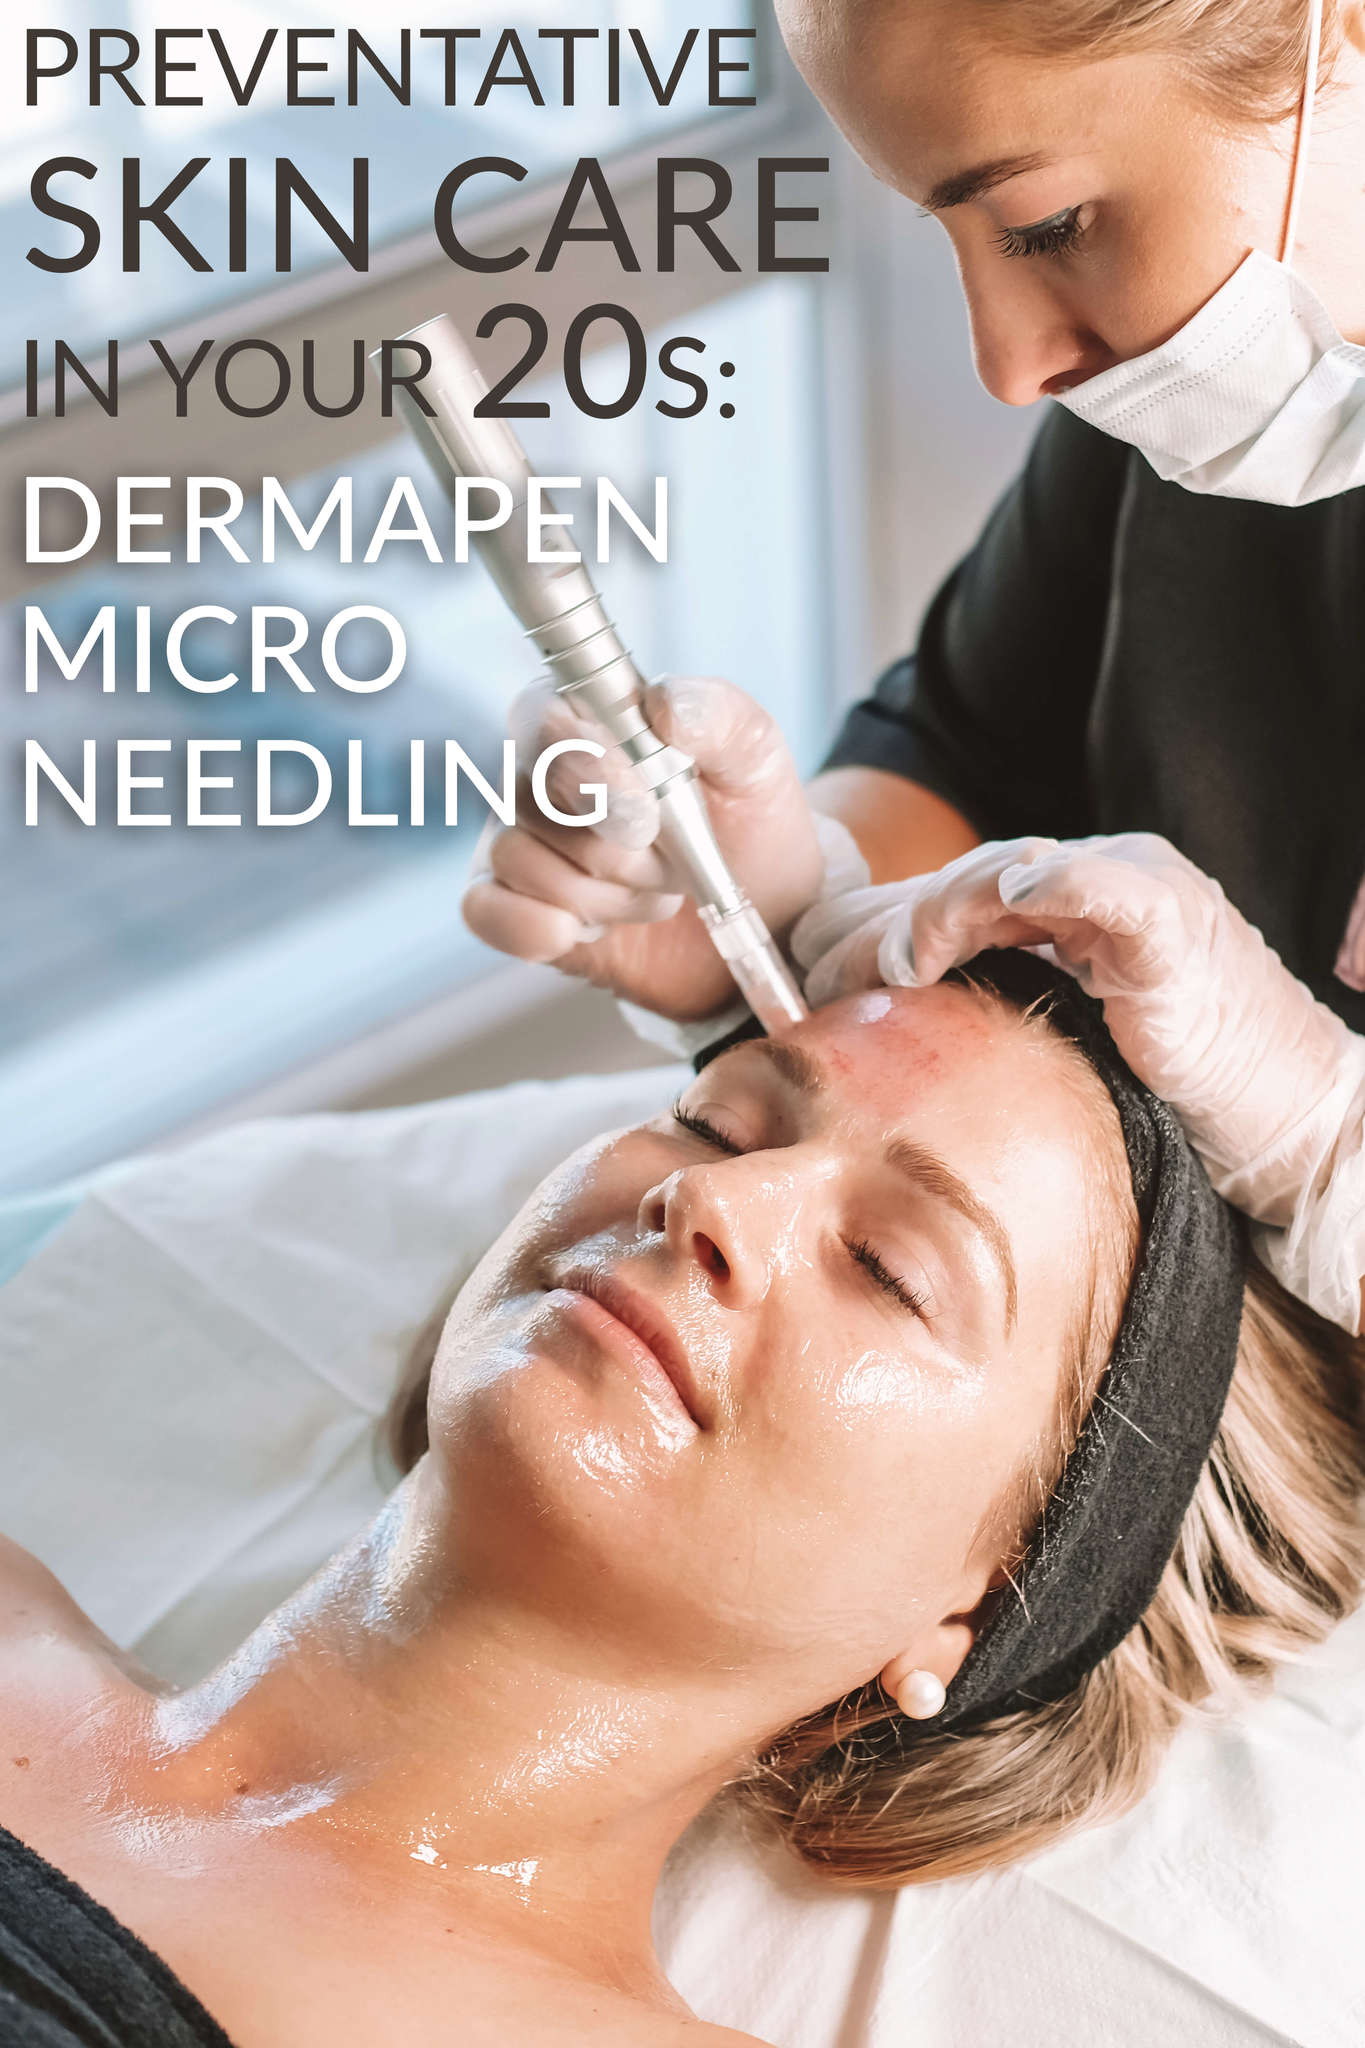 Preventative Skincare in Your 20s: Dermapen Micro Needling